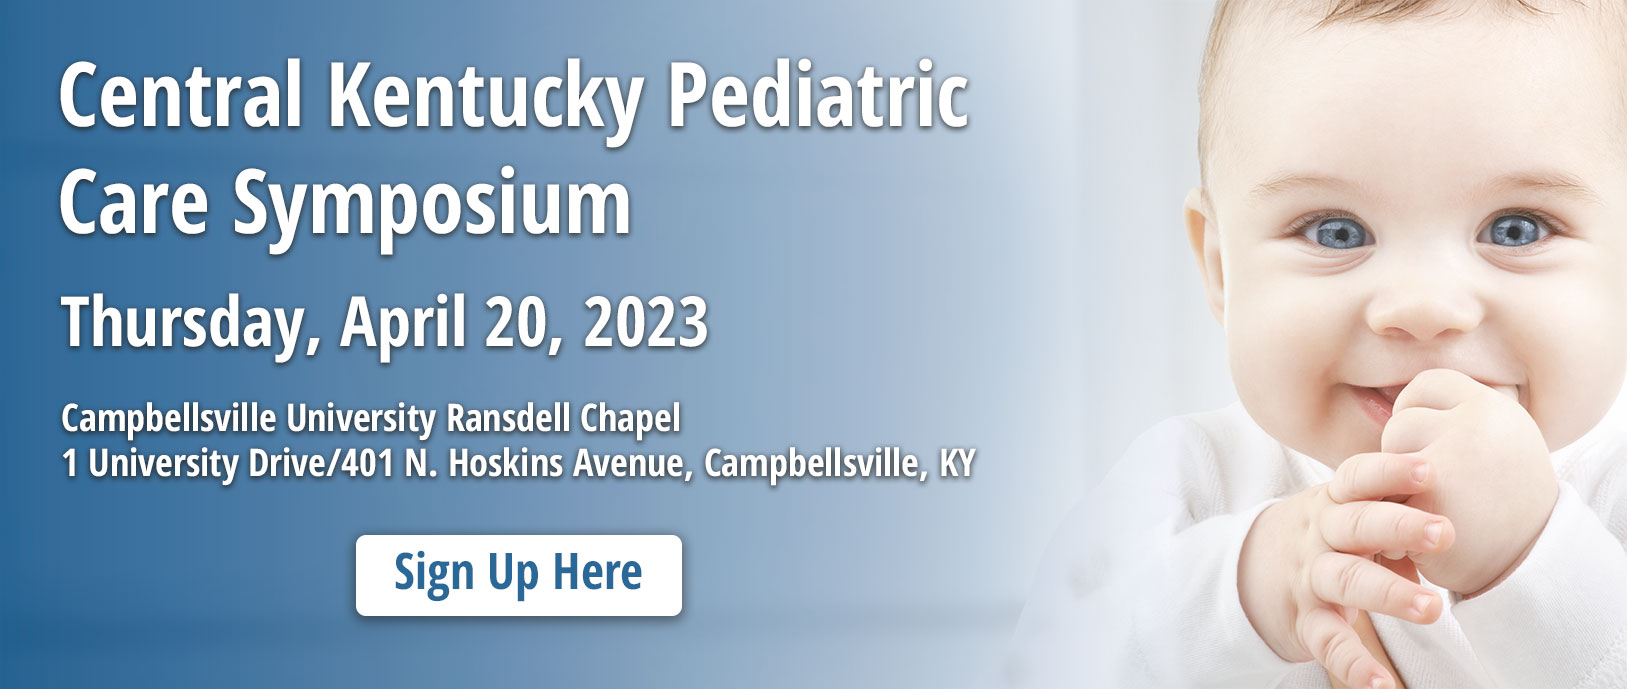 Central Kentucky Pediatric Care Symposium

Thursday, April 20, 2023

Campbellsville University Ransdell Chapel
1 University Drive/401 N. Hoskins Avenue, Campbellsville, KY